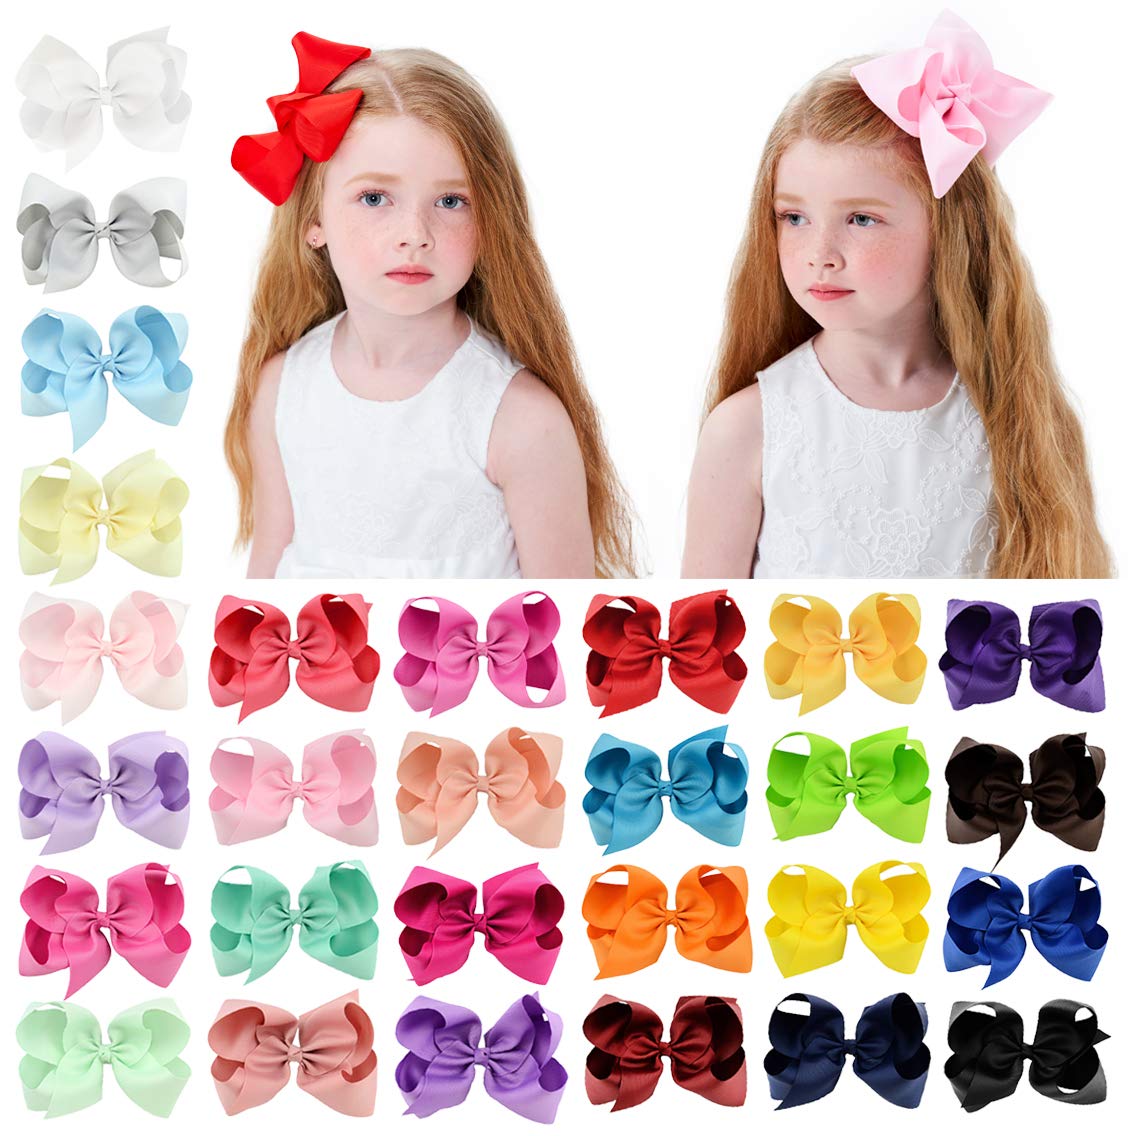 choicbaby DIY Multicolored Girls’ Hair Bows, 28-Piece